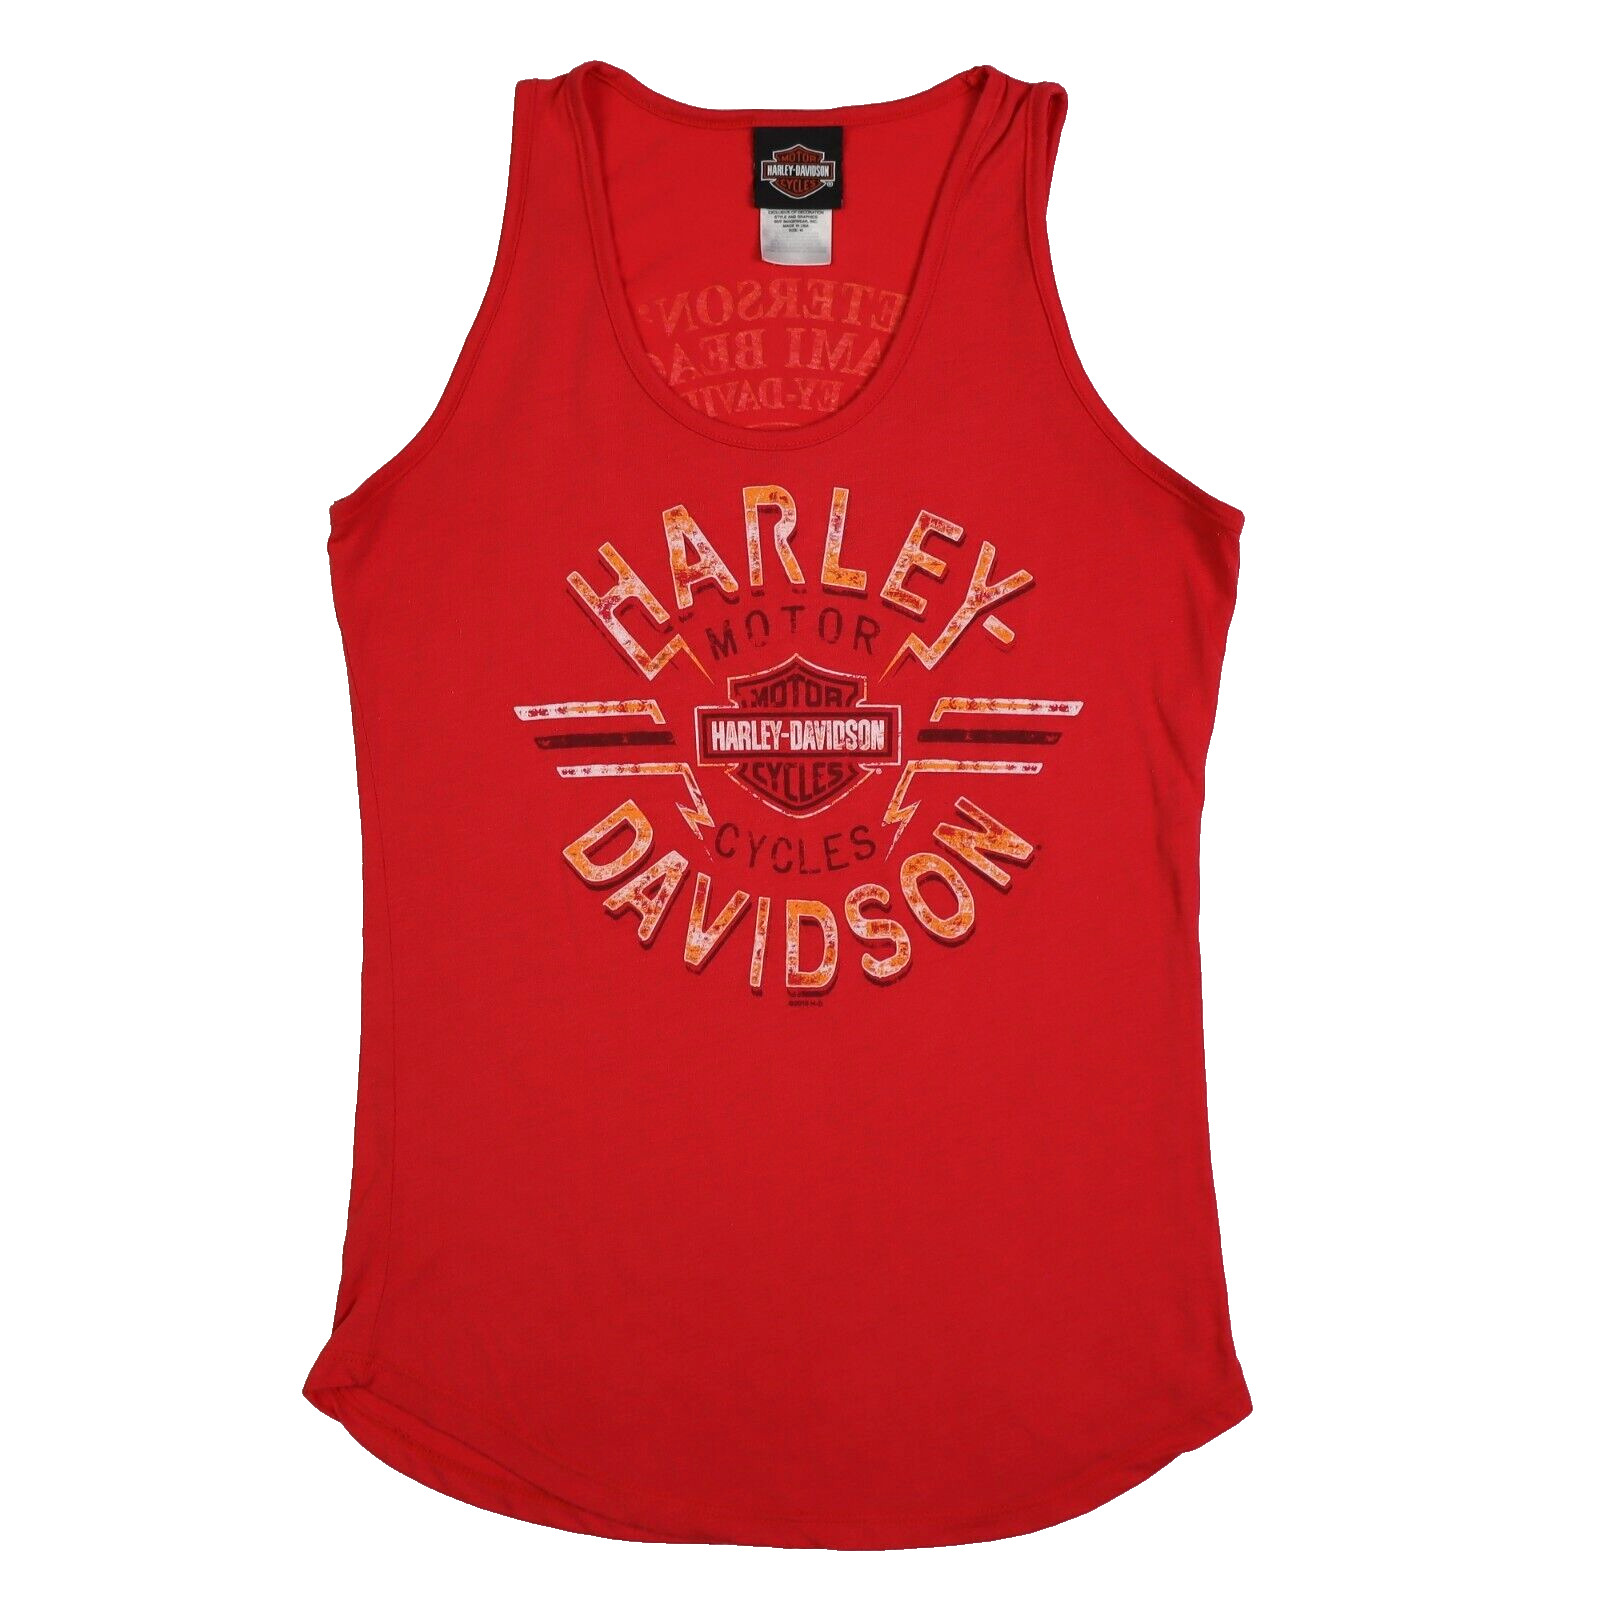 Harley Davidson Women\'s Medium Red Tank Top Shirt Miami Beach Florida Size M